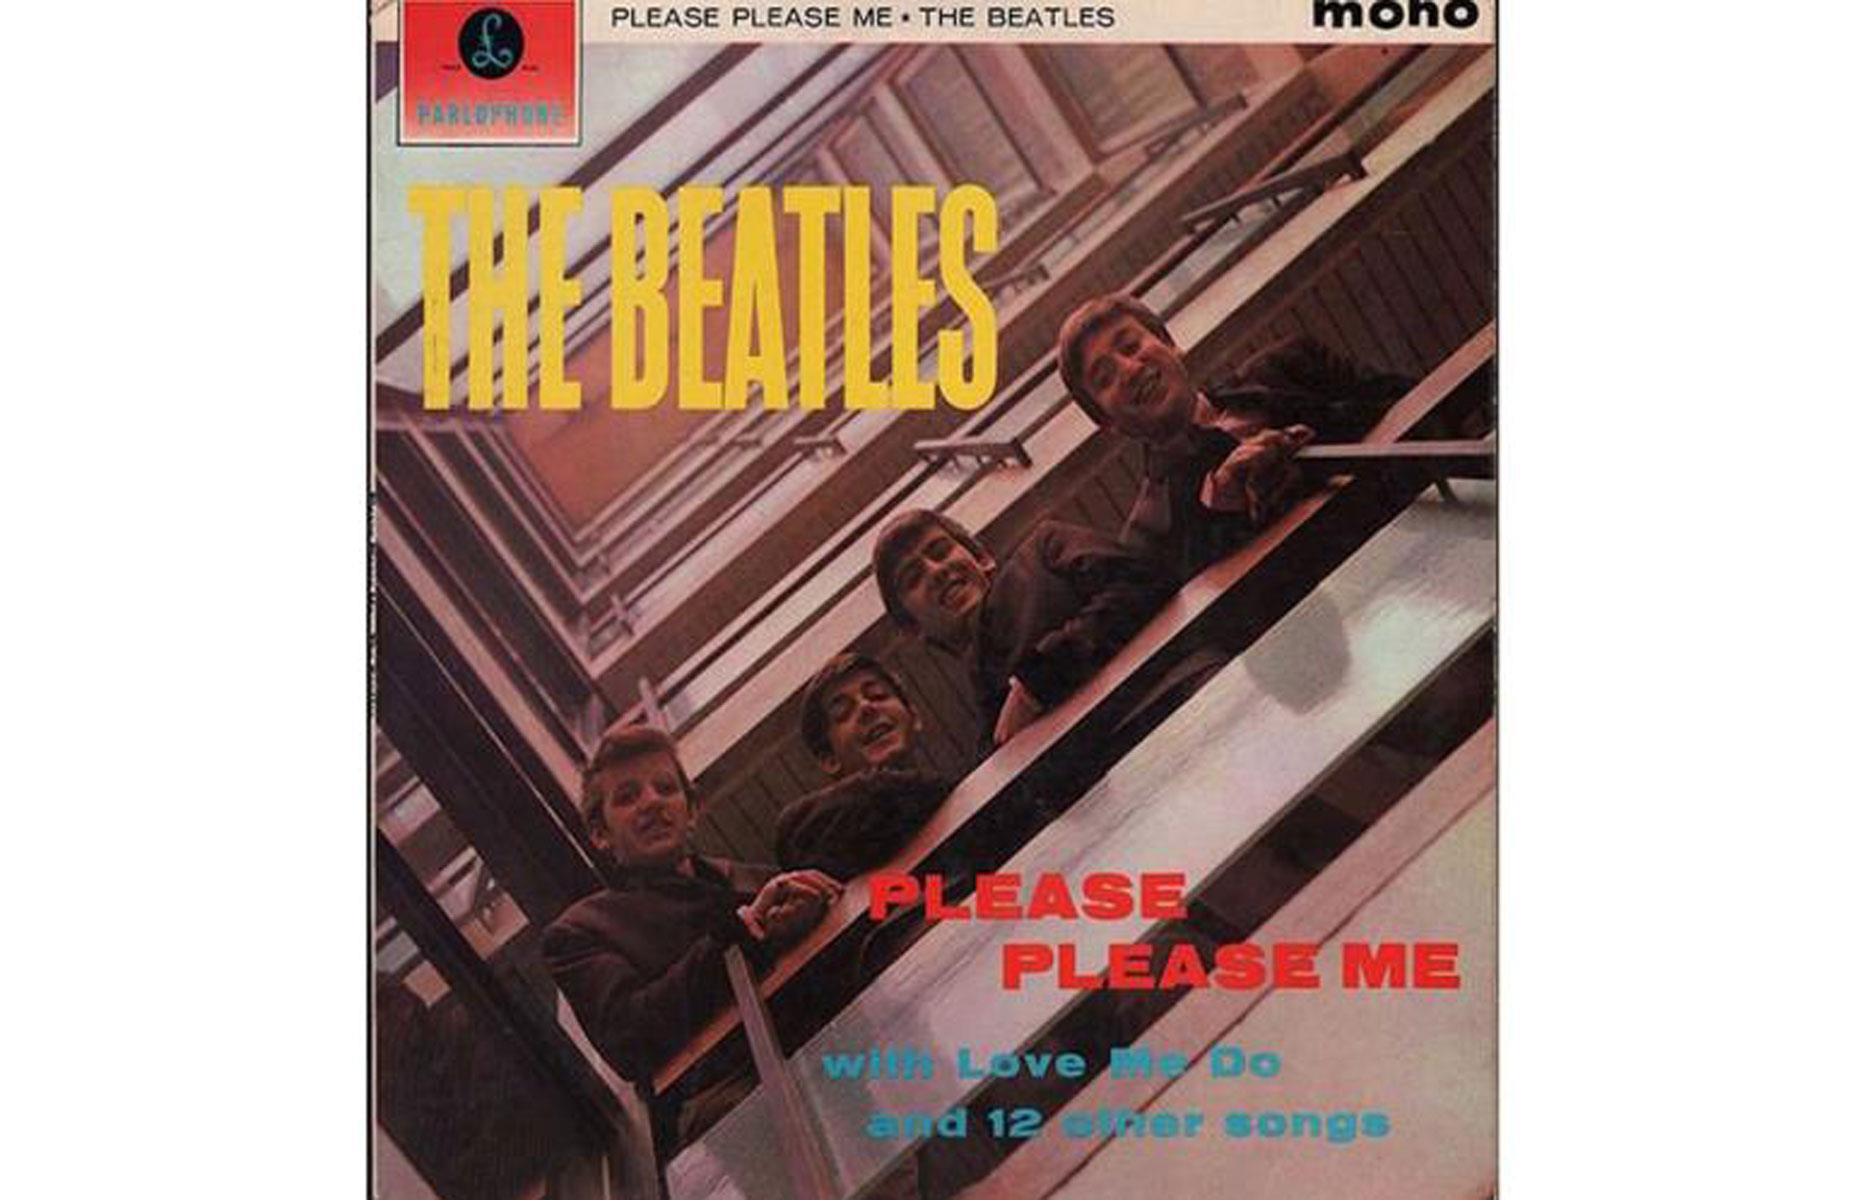 The Beatles' Please Please Me 12” vinyl album early pressing: $7,500 (£6k)